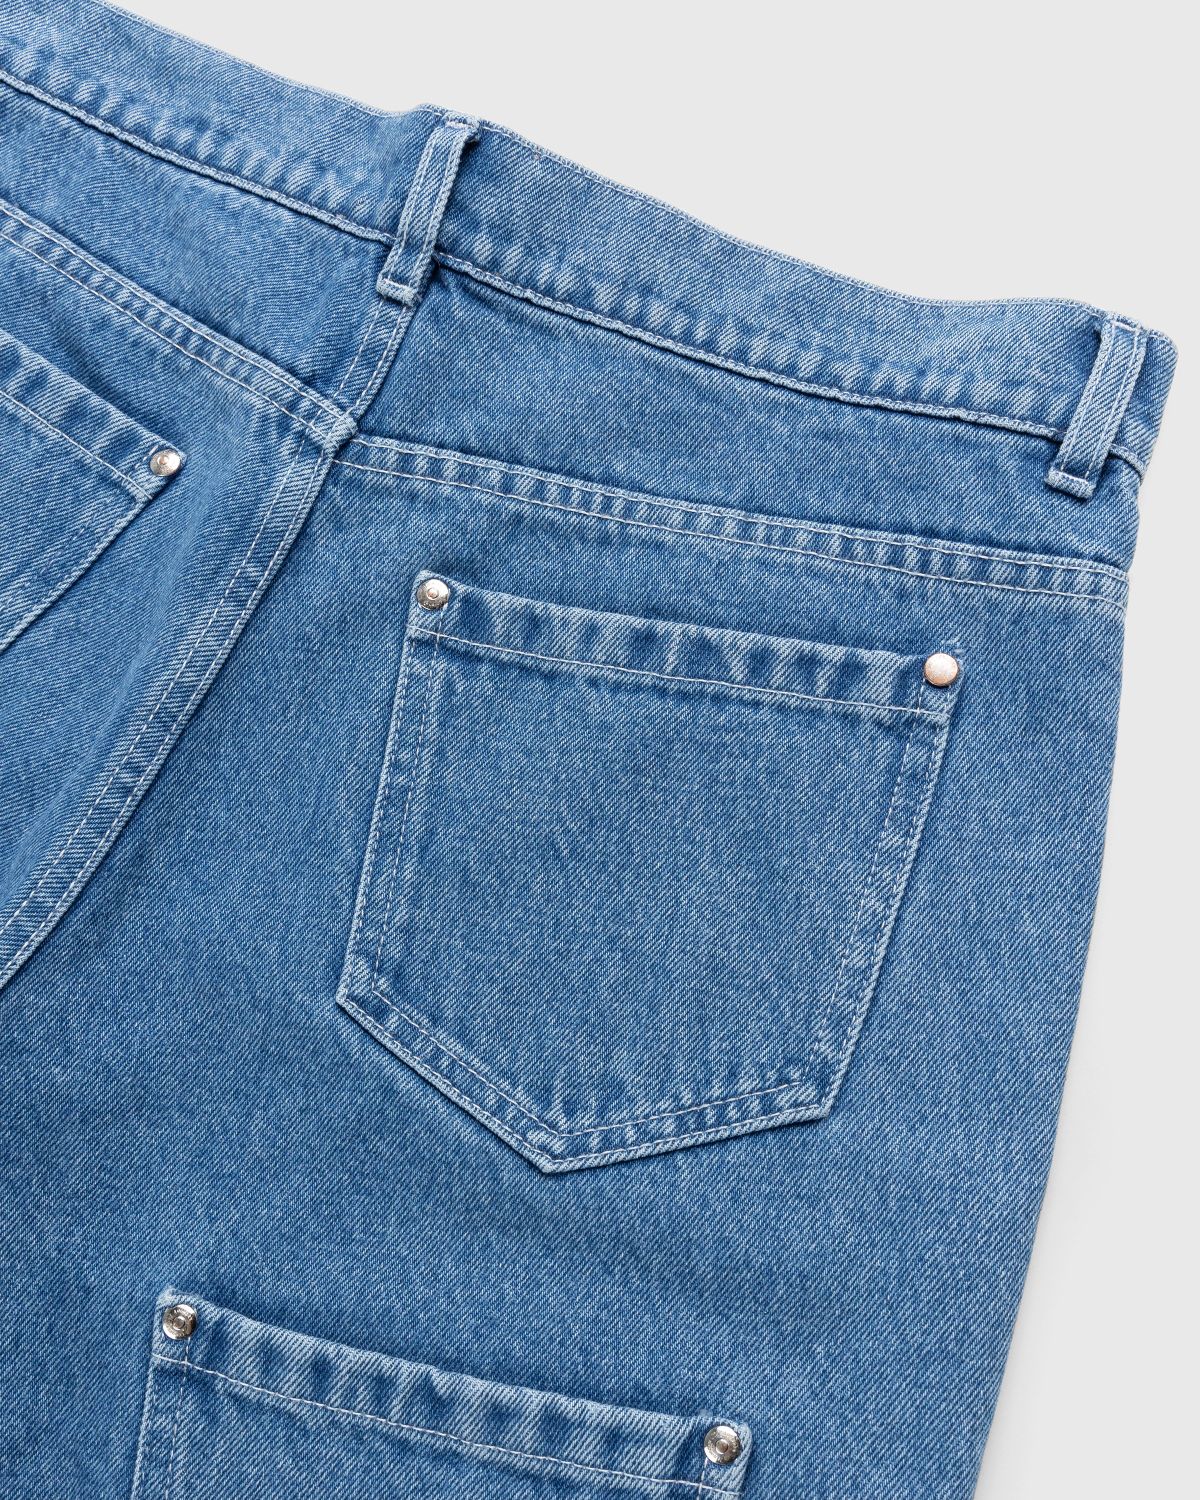 Lourdes New York – Multi-Pocket Denim Blue - Pants - Blue - Image 6